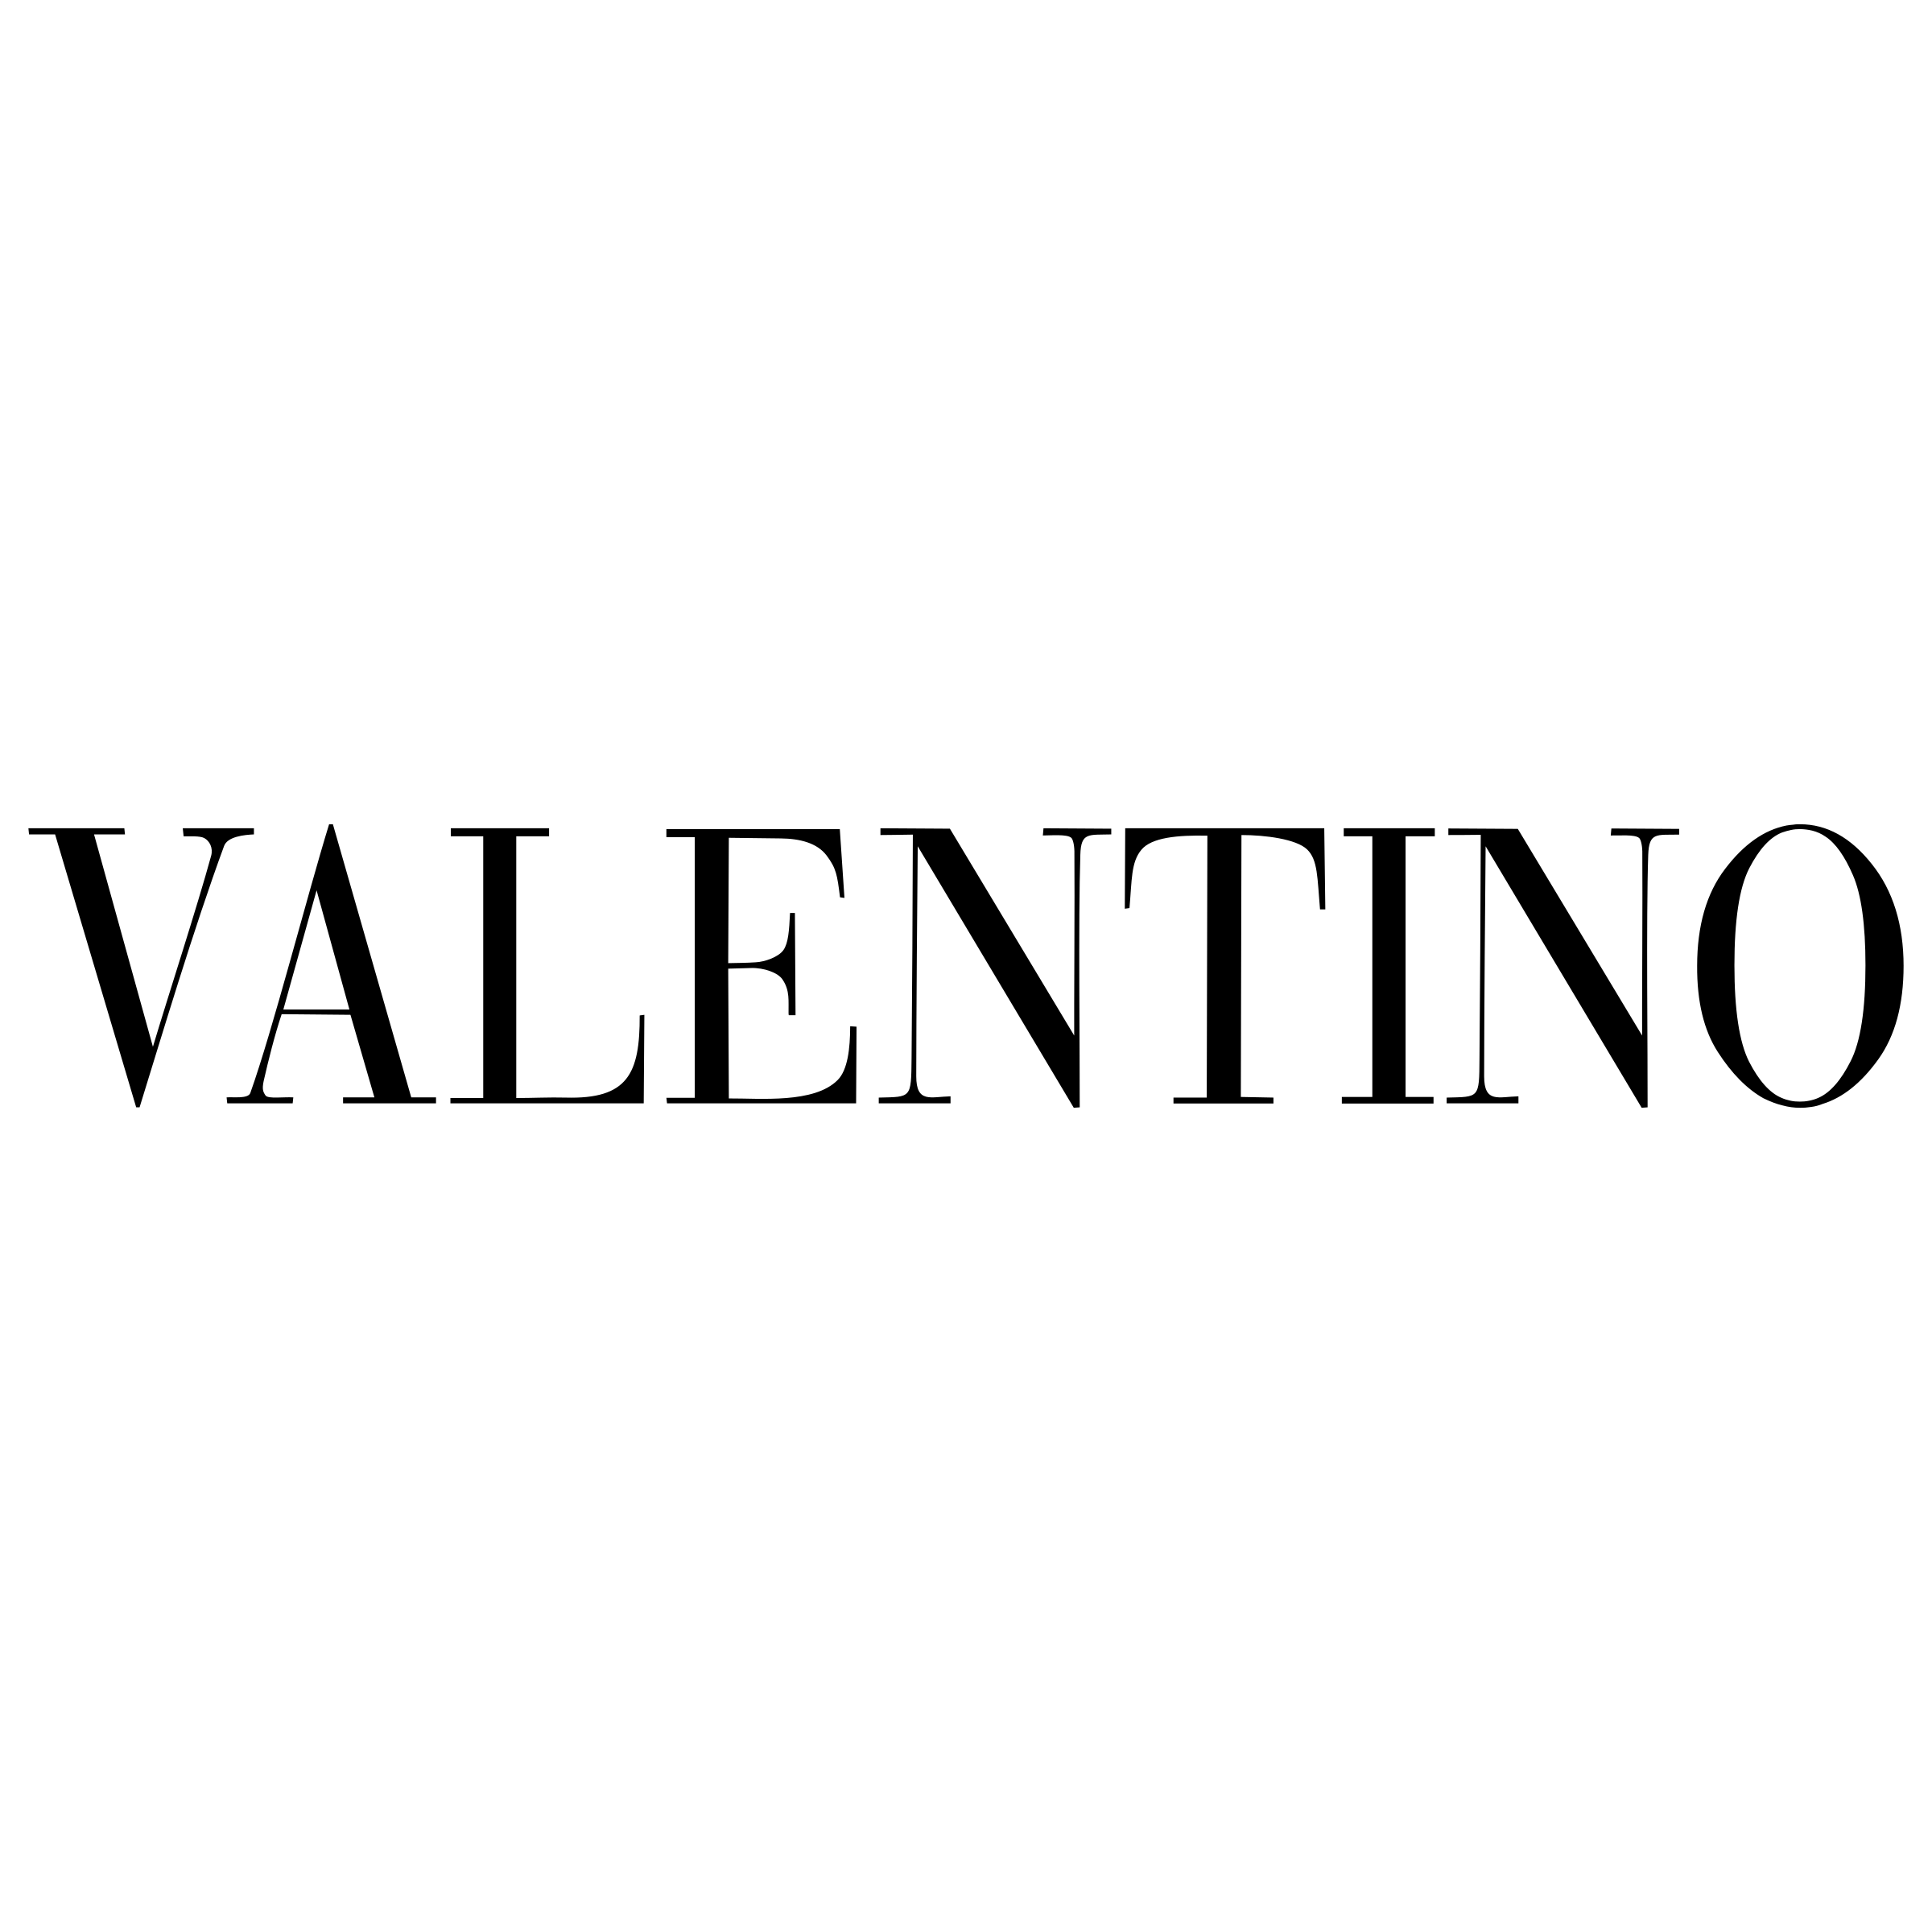 Valentino Logo - Valentino Logo PNG Transparent & SVG Vector - Freebie Supply